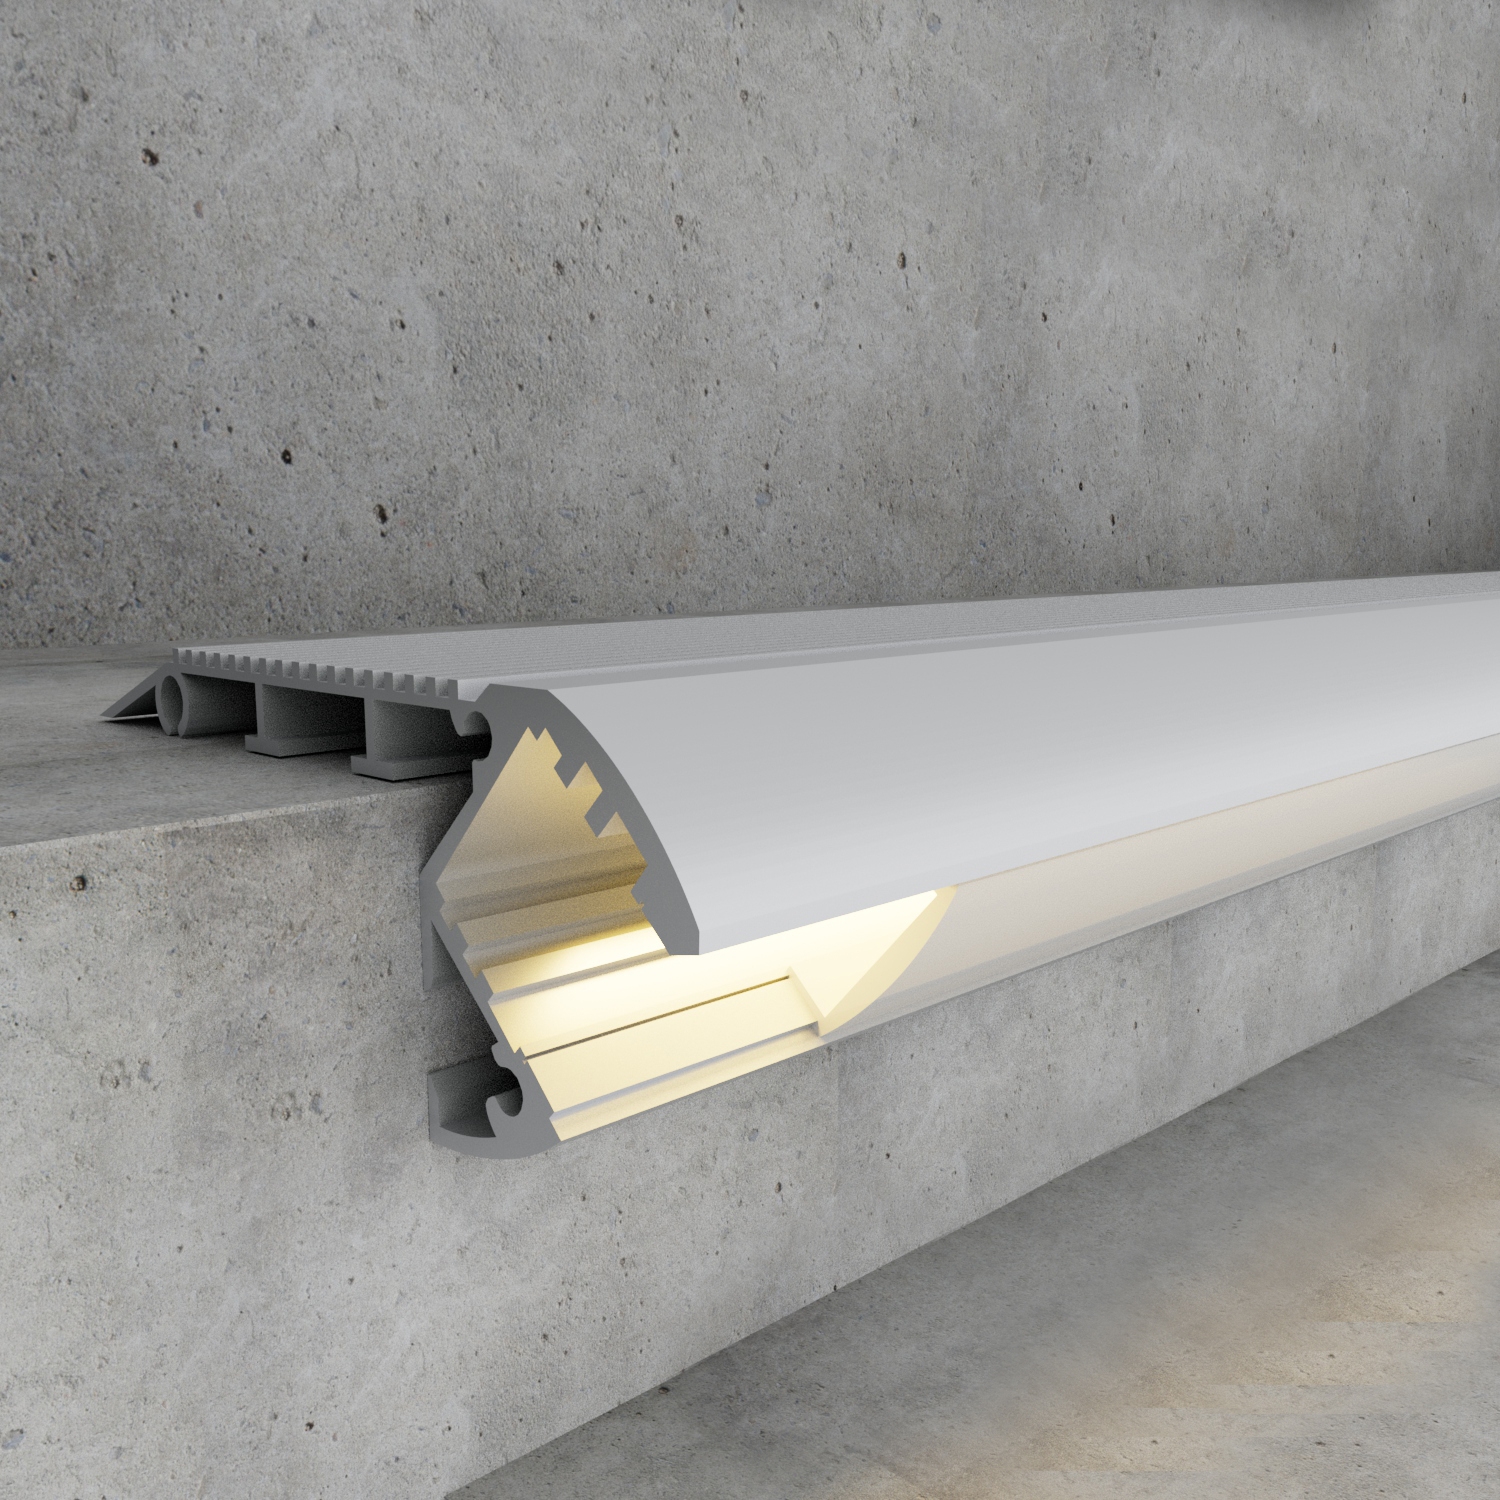 Perfil de Aluminio Especial Escaleras 12/24V 2 Metros - Dsc